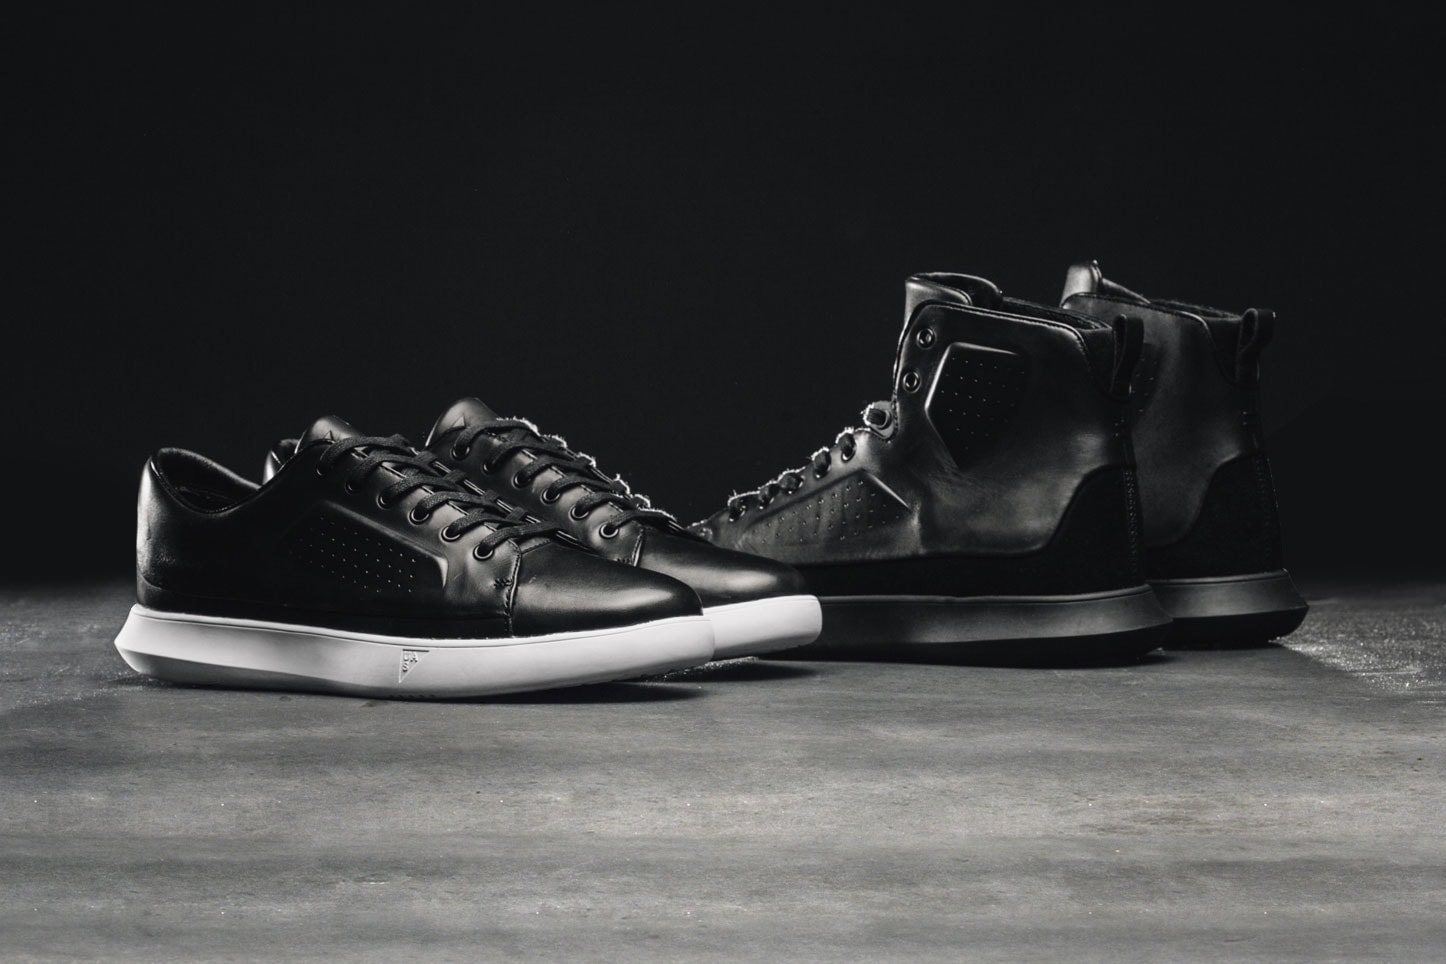 Tim Coppens x UAS ”Club" Footwear Collection